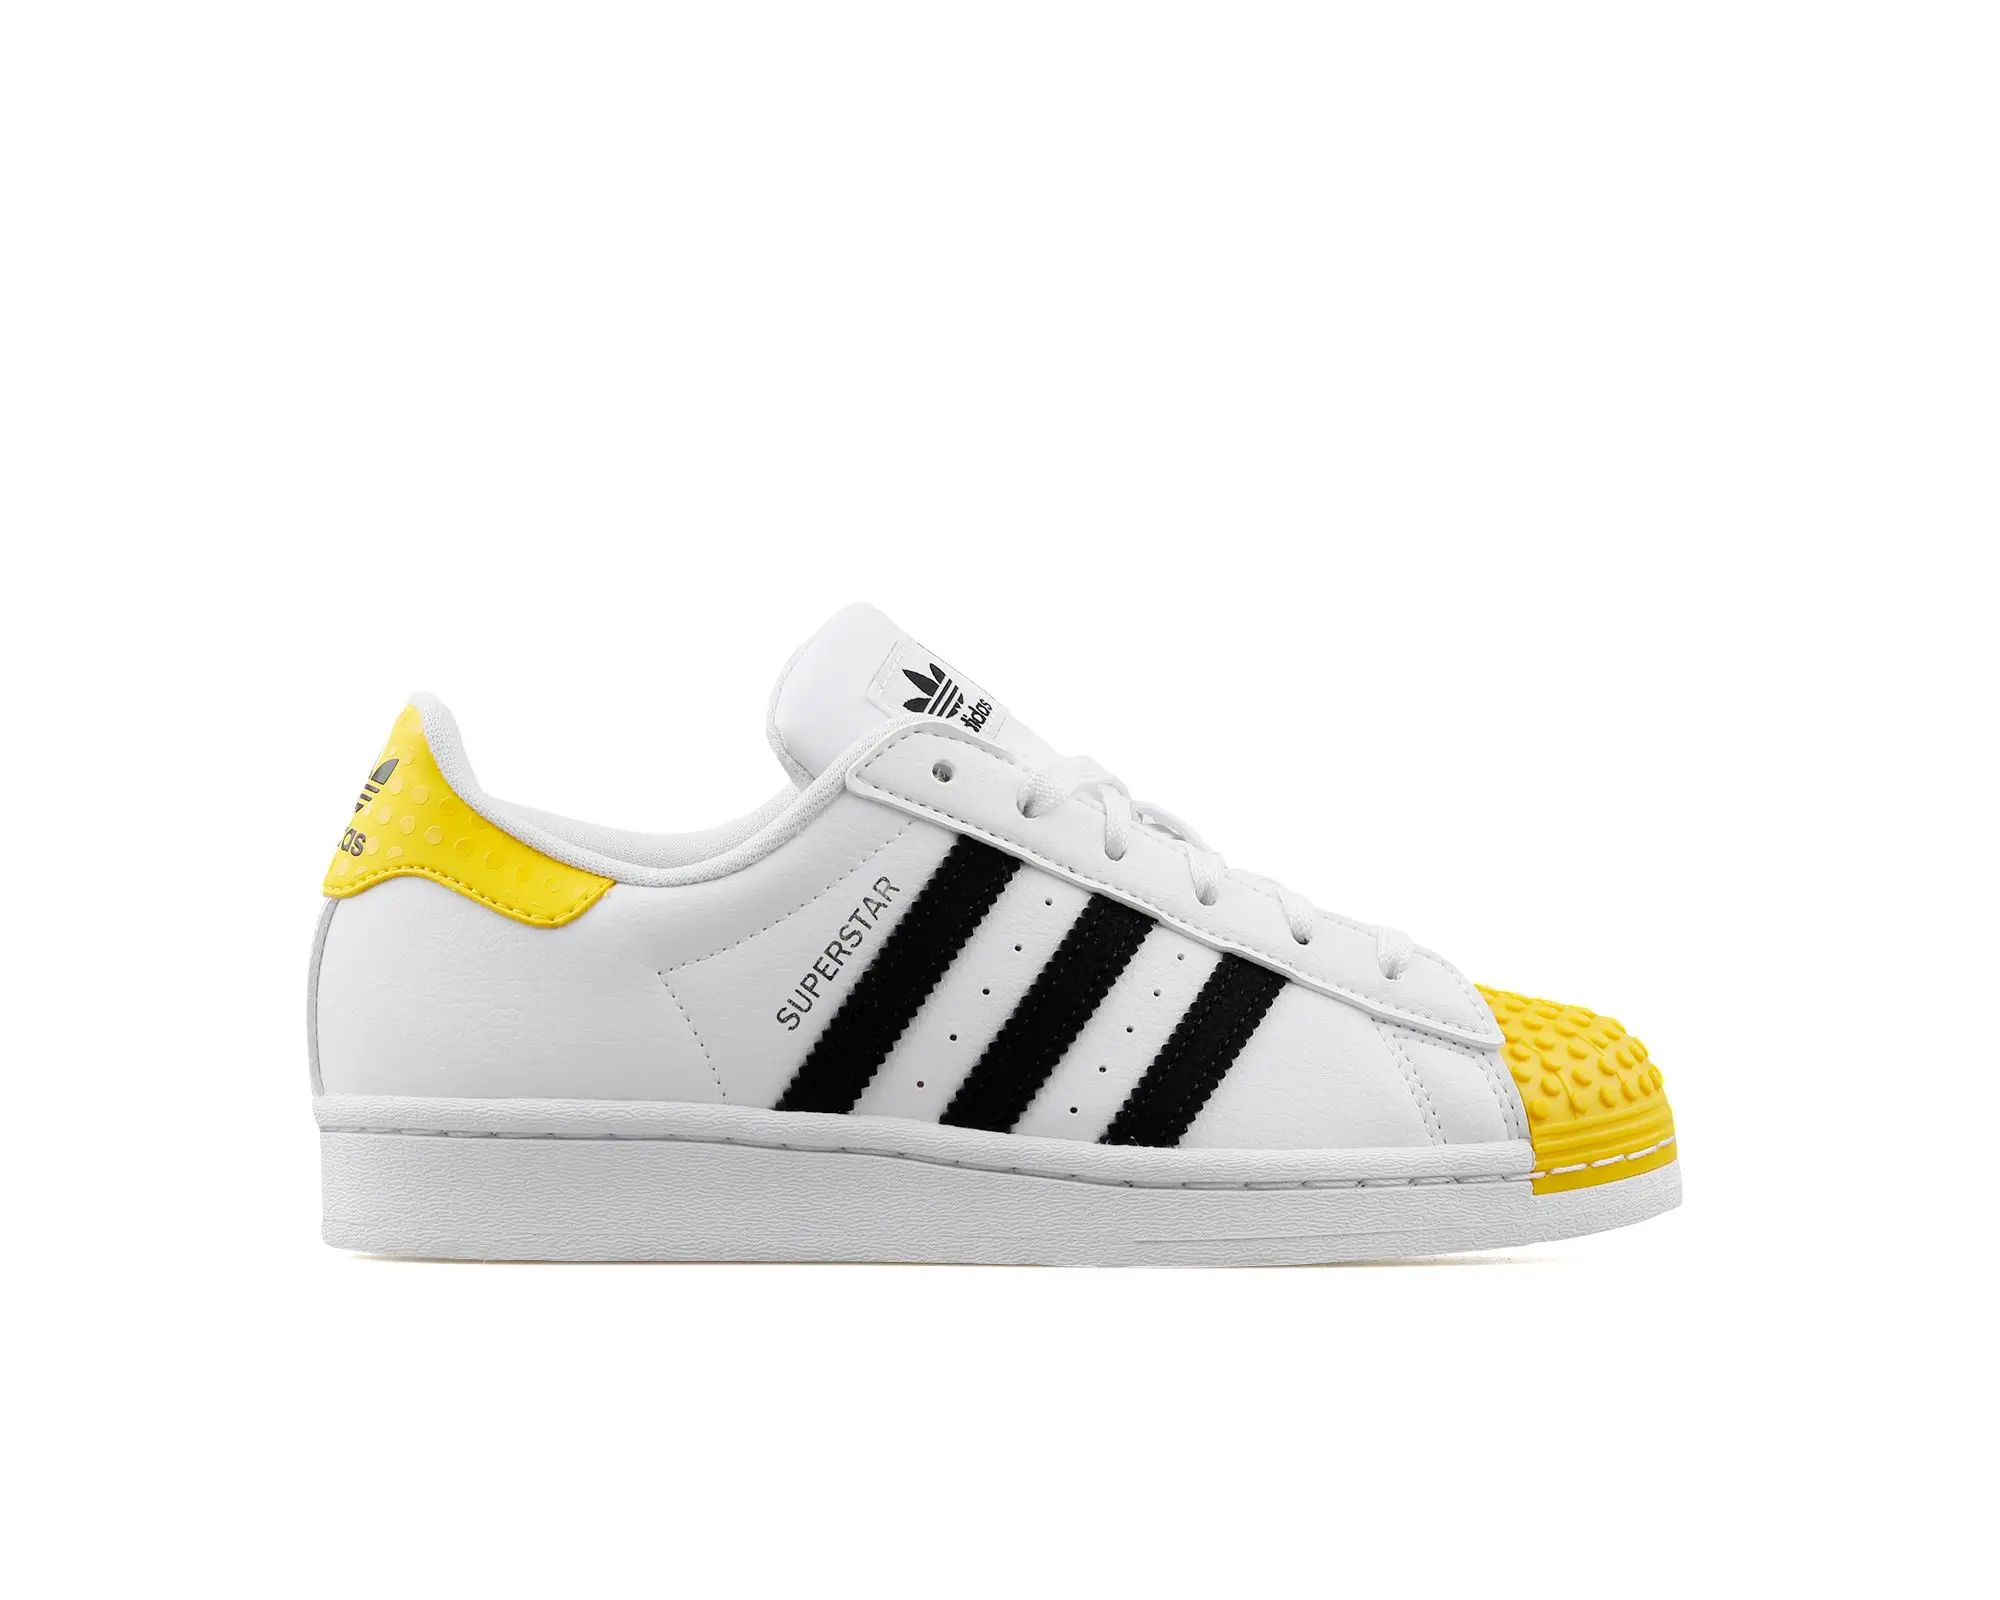 Adidas Original Superstar J White Kids Shoes Unisex Girls & Boys Casual Sneakers Sneakers